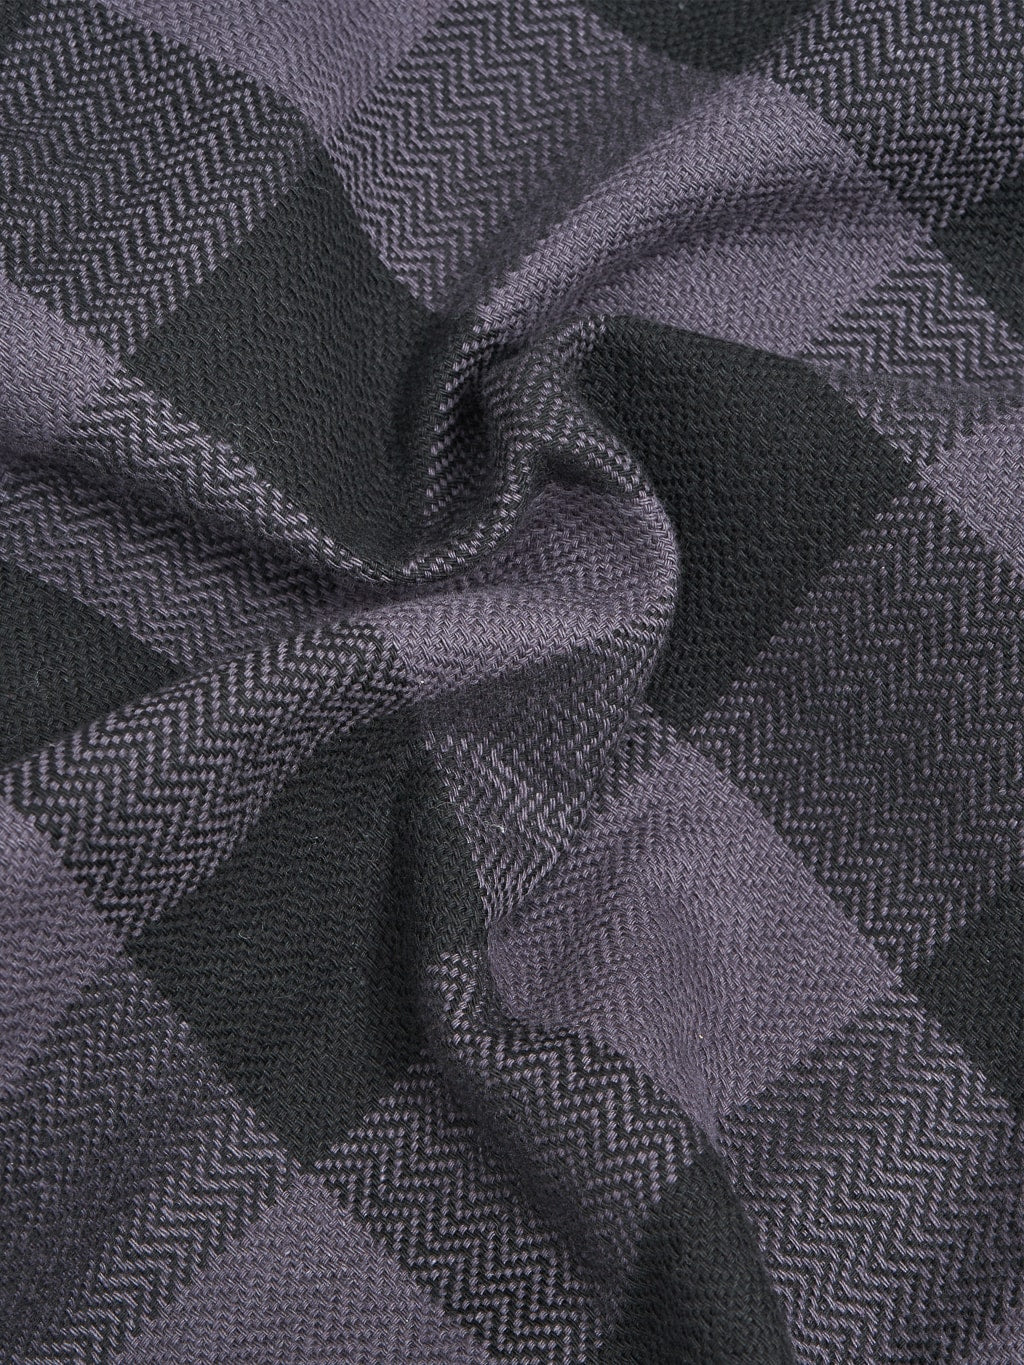 The Flat Head Block Check Flannel Shirt Grey cotton fabric